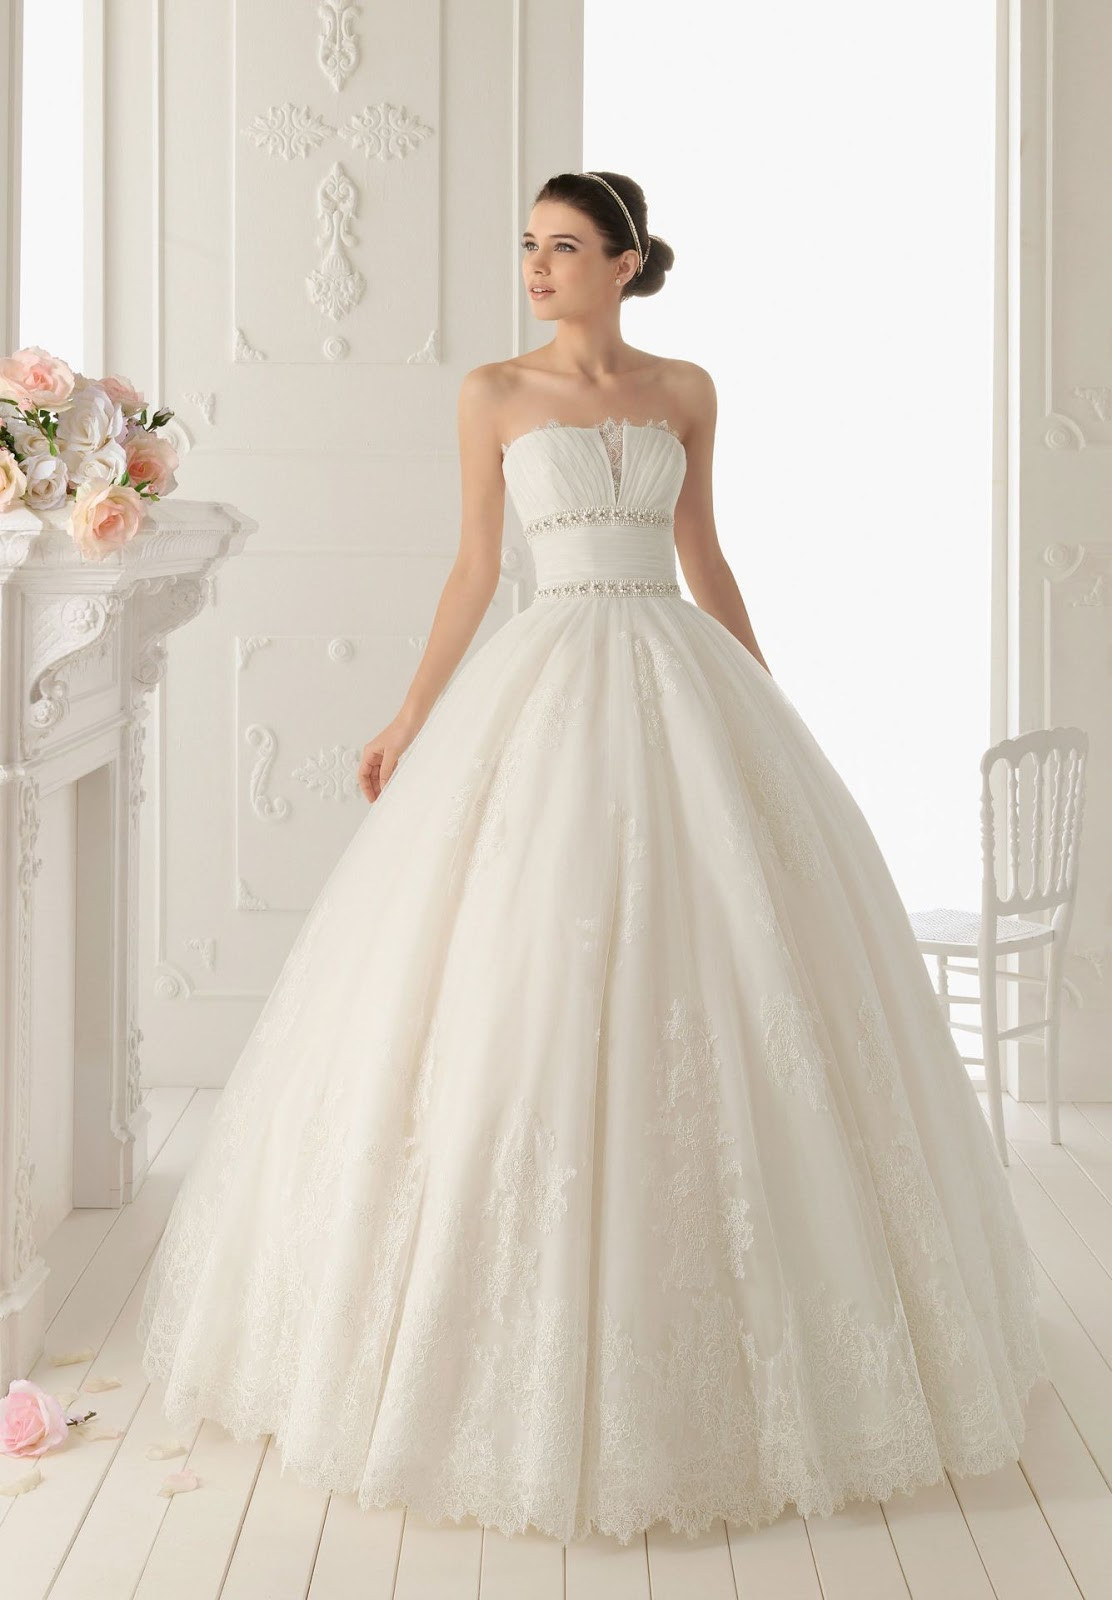 Elegant Wedding Dress
 WhiteAzalea Ball Gowns Lace Ball Gown Wedding Dress